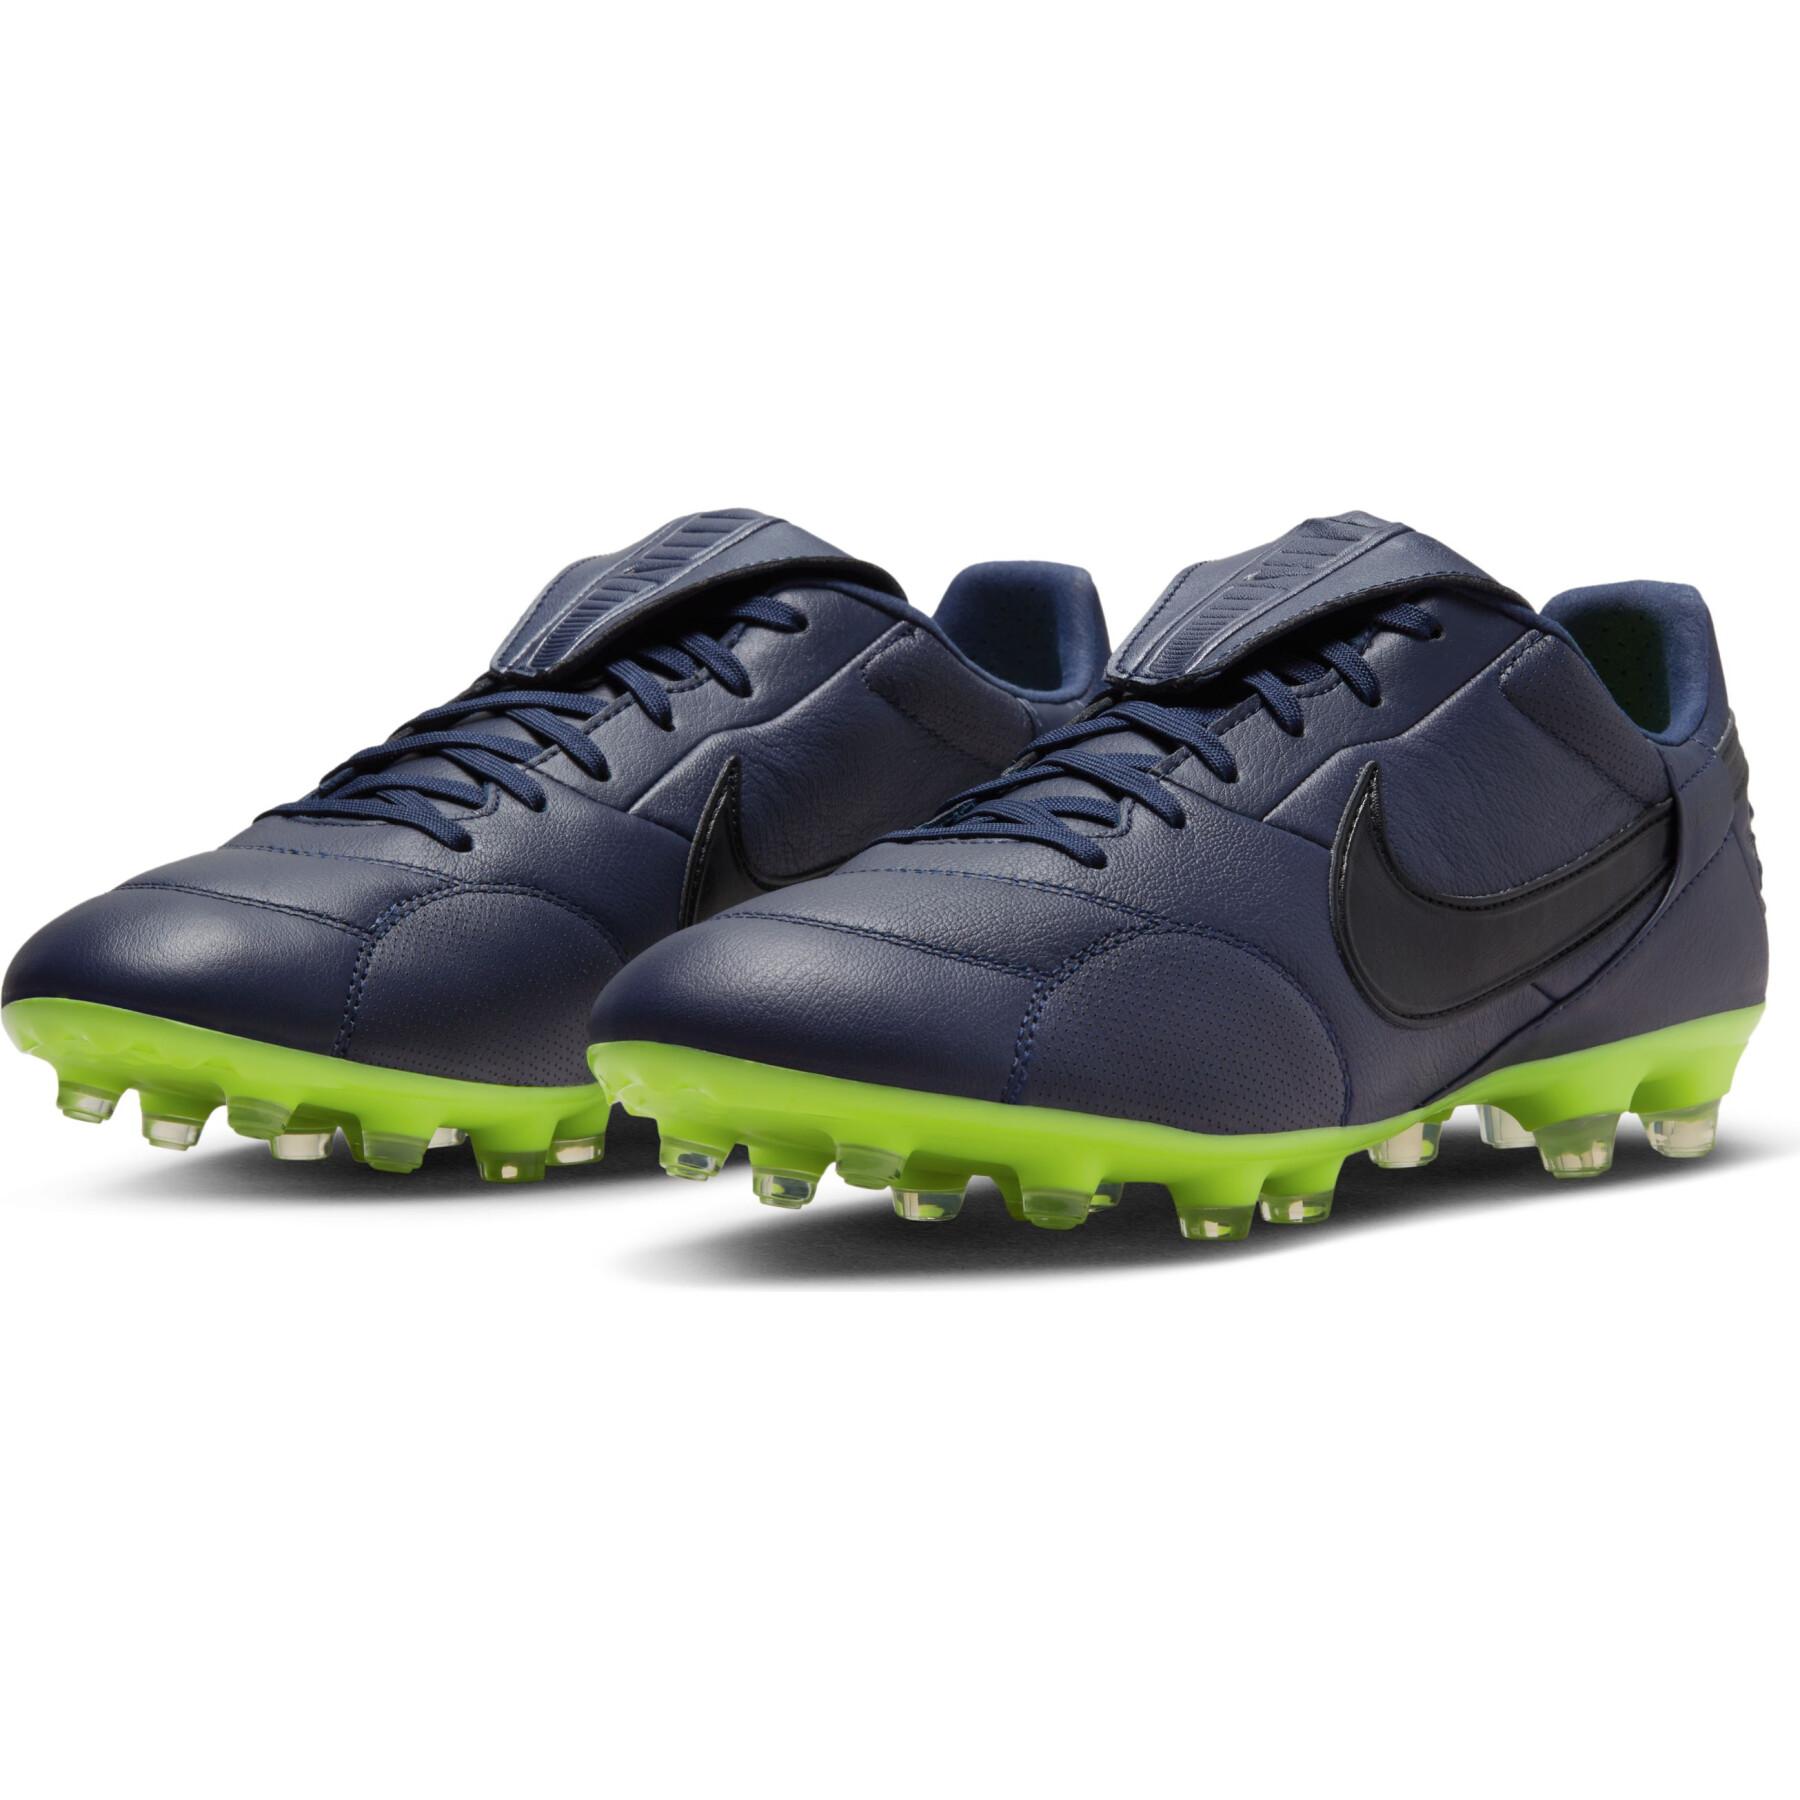 Soccer shoes Nike The Premier 3 FG